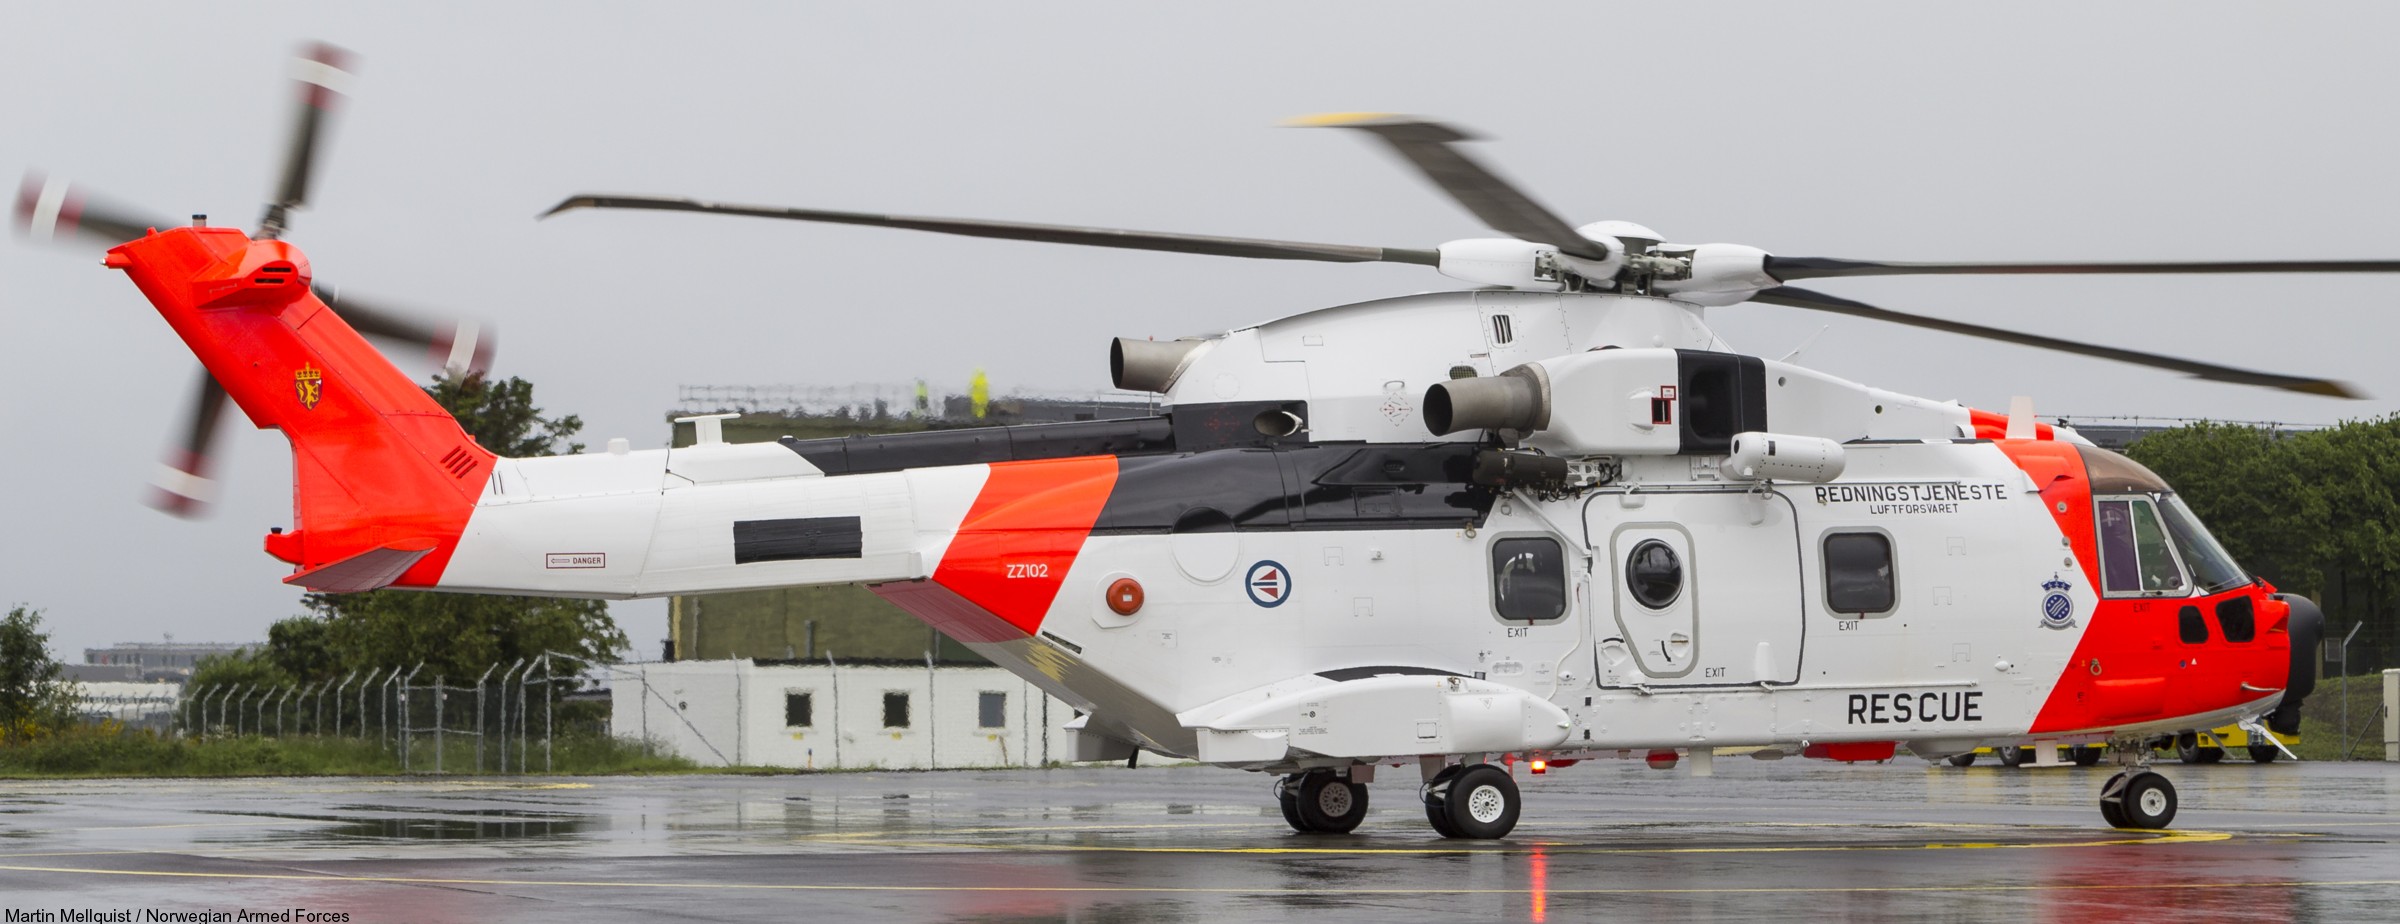 agusta westland aw101 sar helicopter royal norwegian air force luftforsvaret rescue 02x